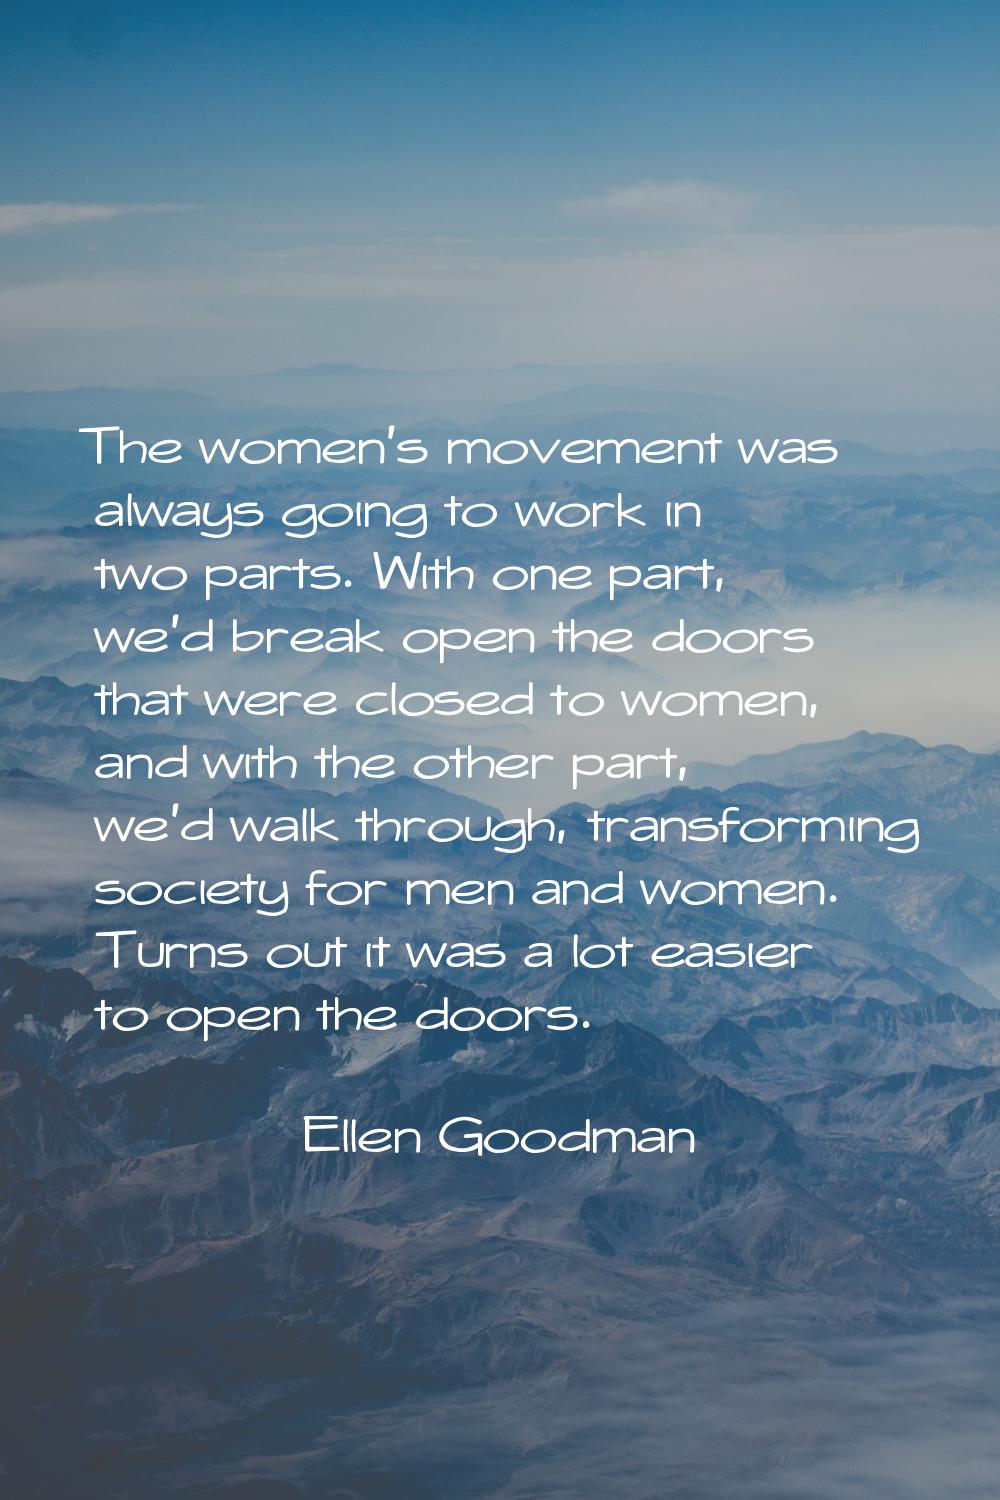 The women's movement was always going to work in two parts. With one part, we'd break open the door